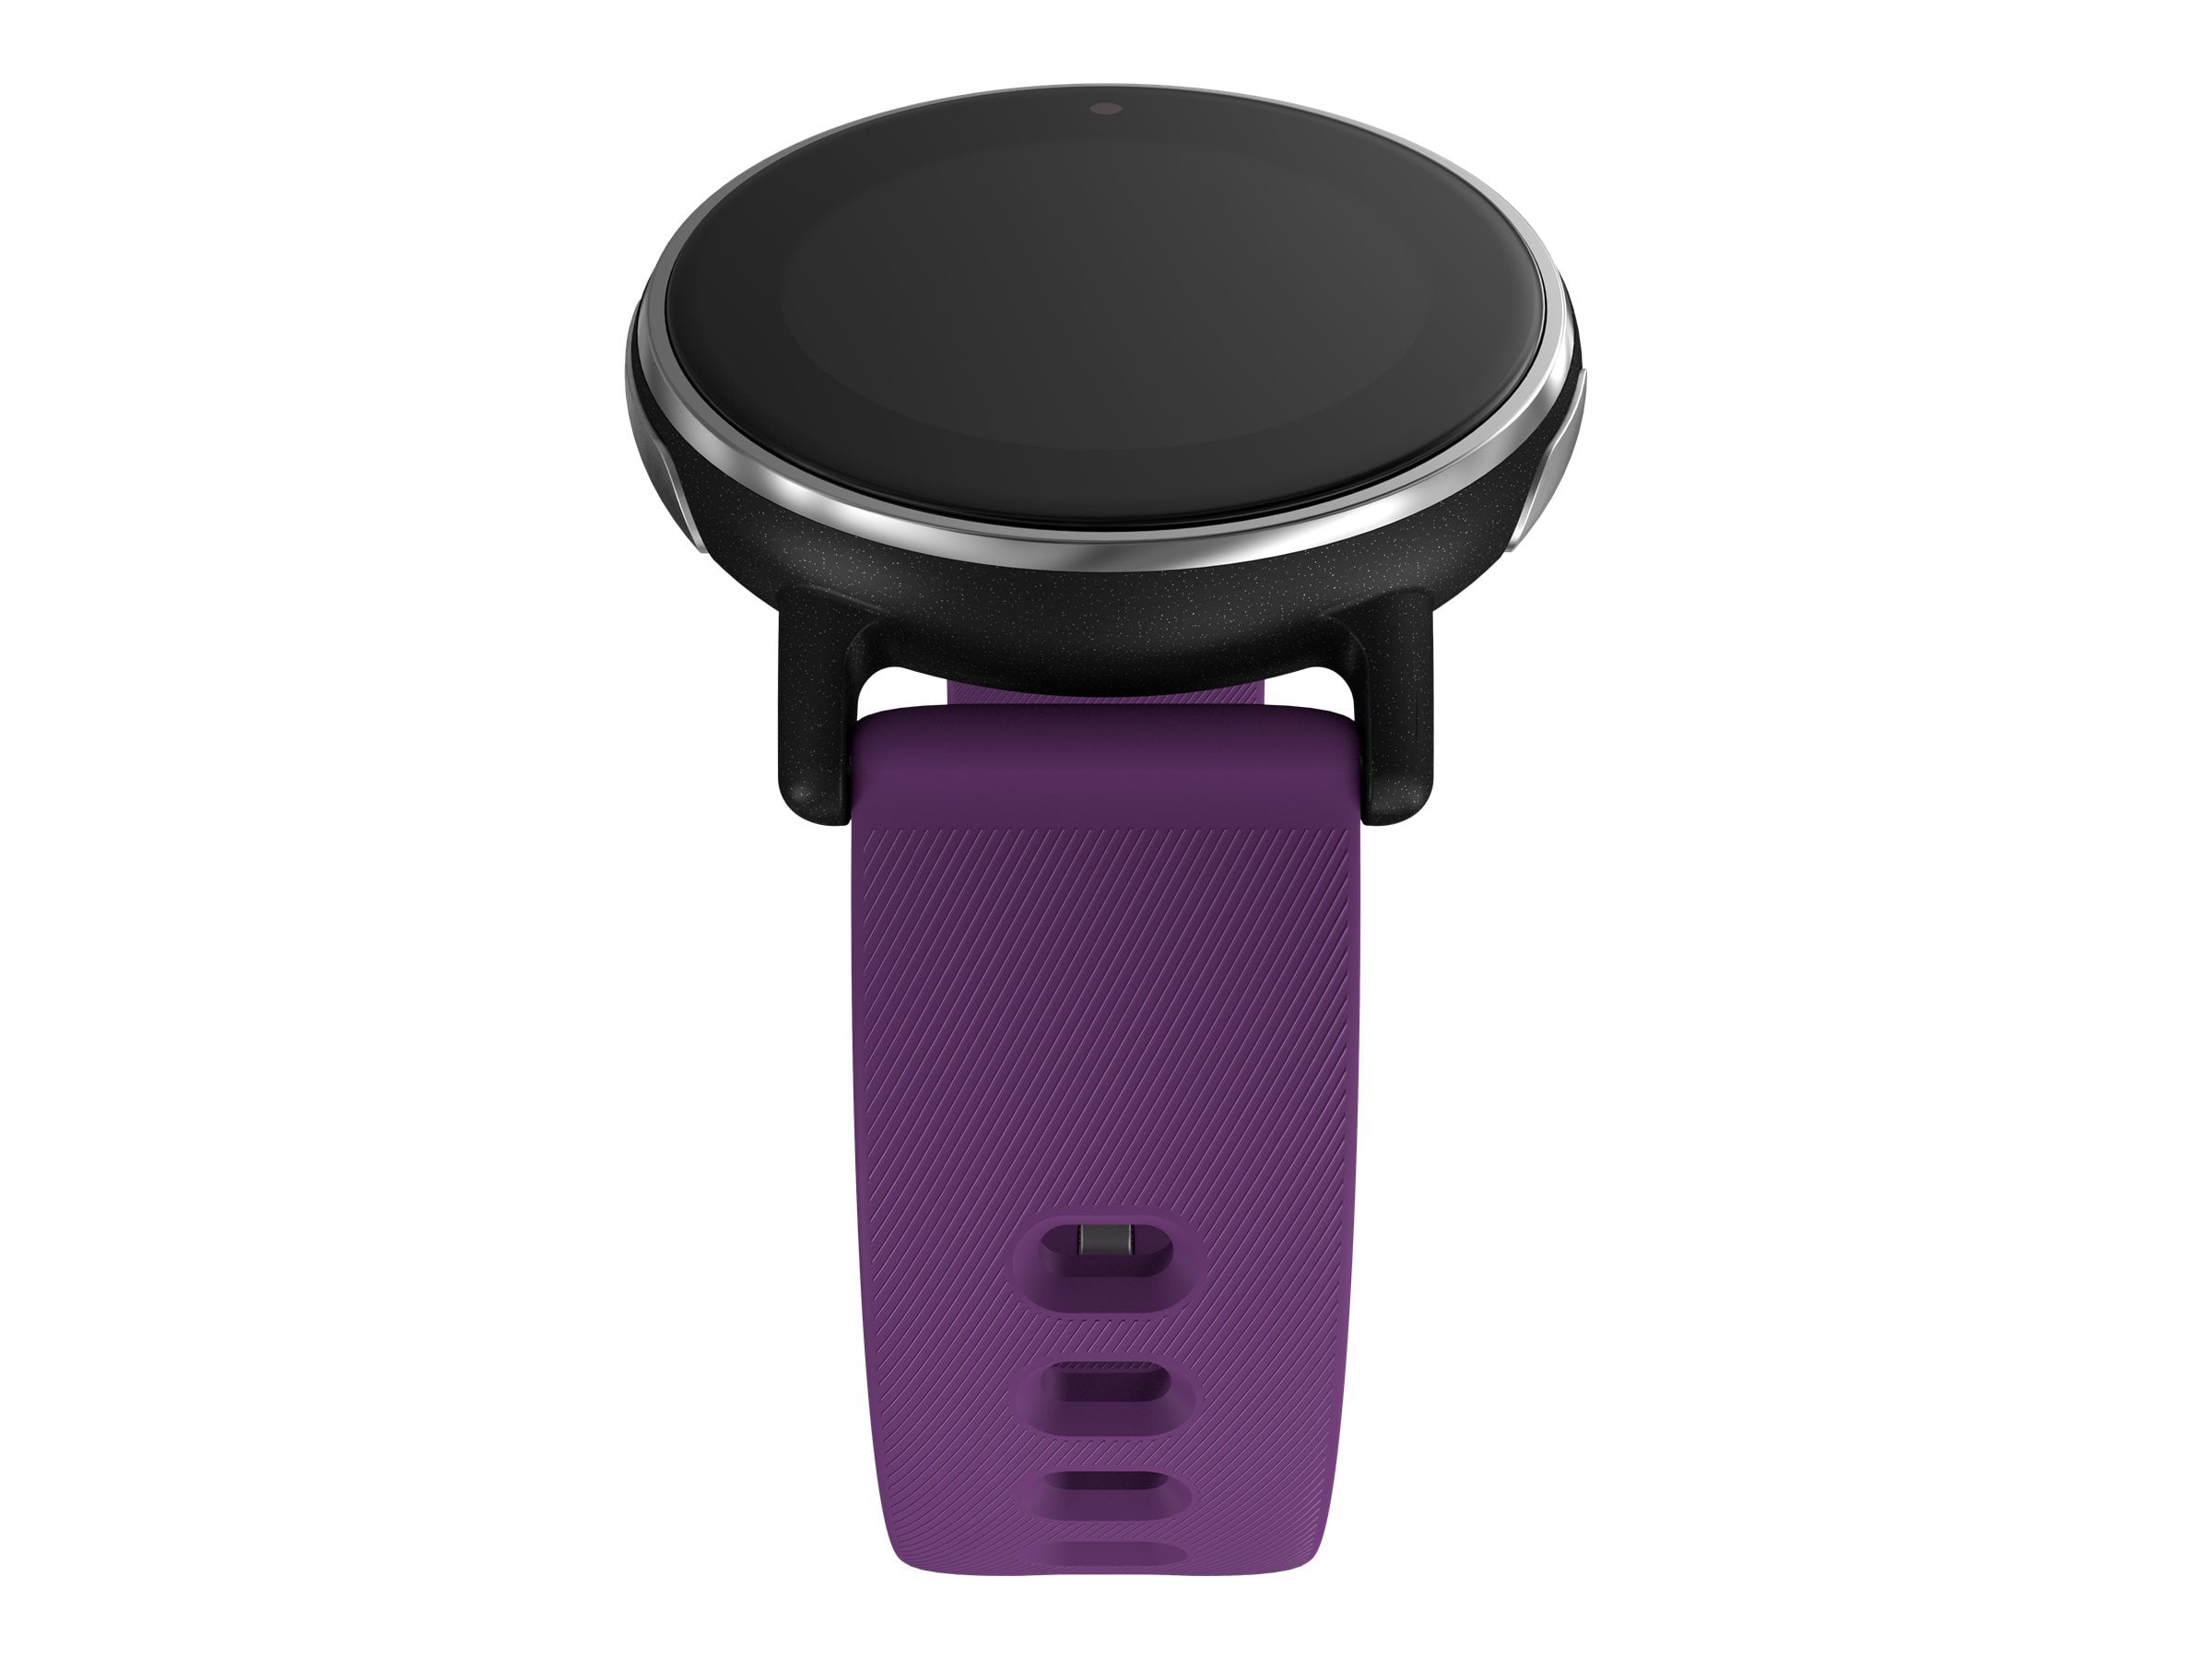 Acer Ware - 42 mm - smart watch with strap - purple - display 1.1" - 4 MB - Bluetooth - 1.3 oz - Walmart.com